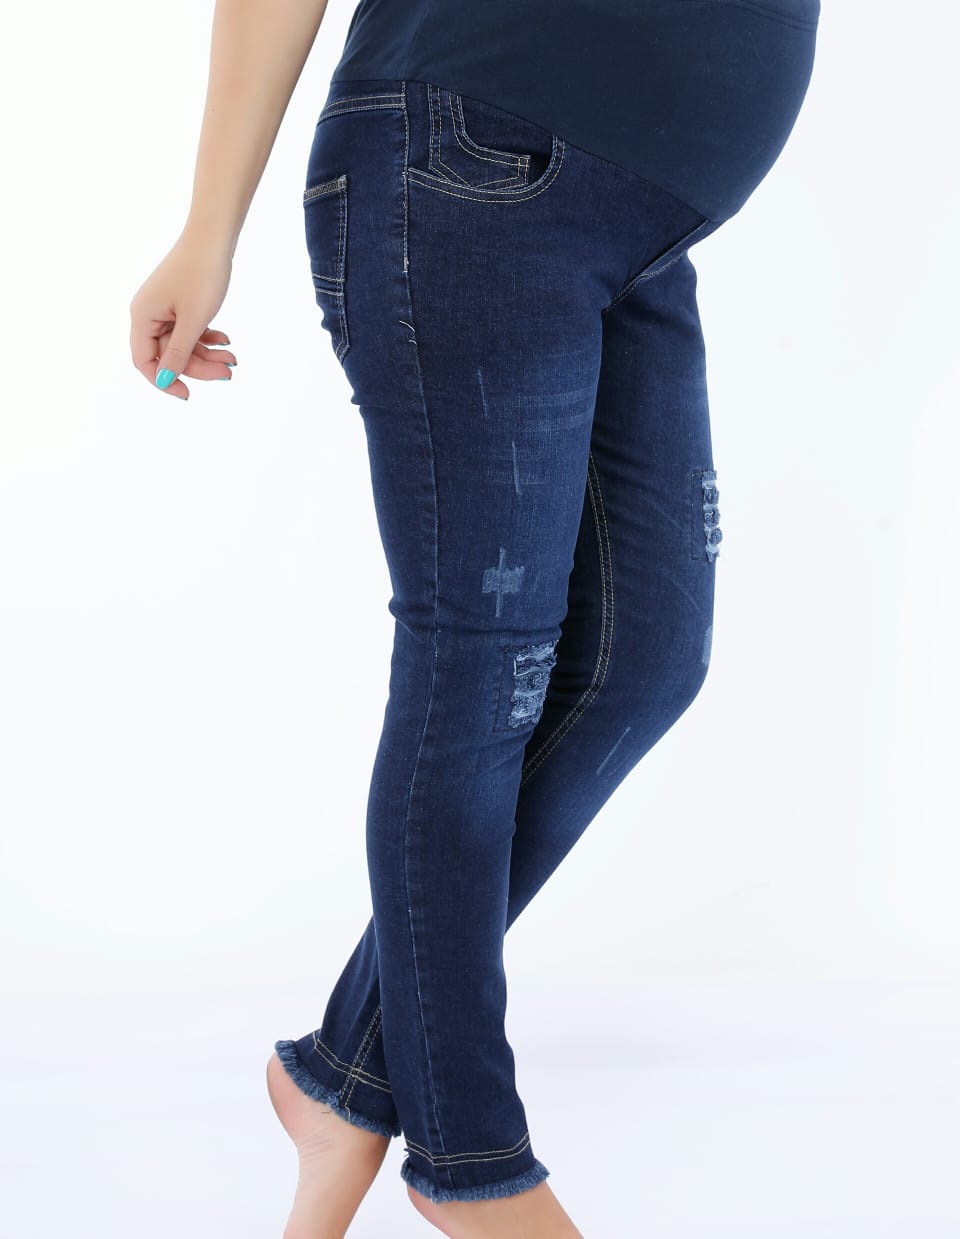 Pantalon jeans pour femme enceinte modèle 405 - bleu marin